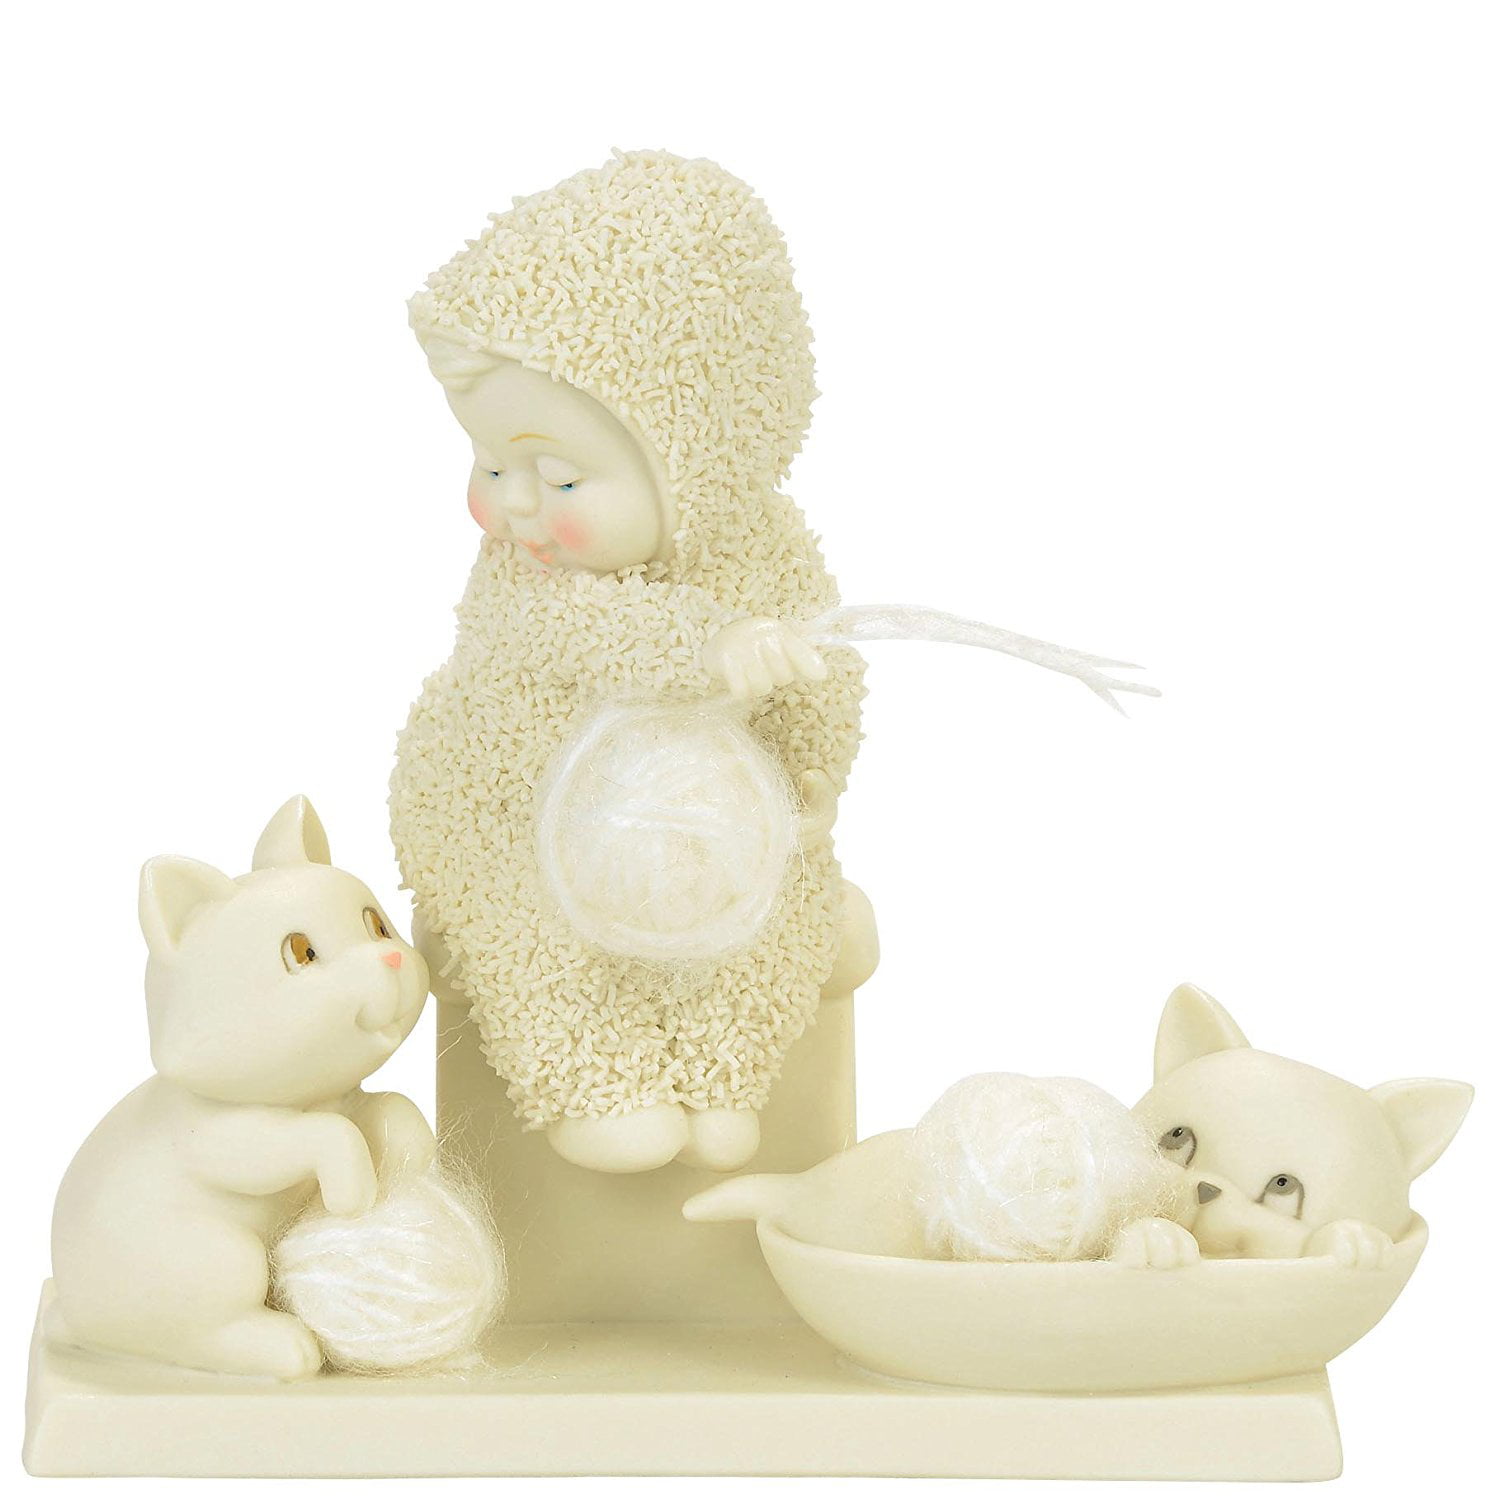 Department 56 Snowbabies “Make New Friends” Porcelain Figurine 4” 